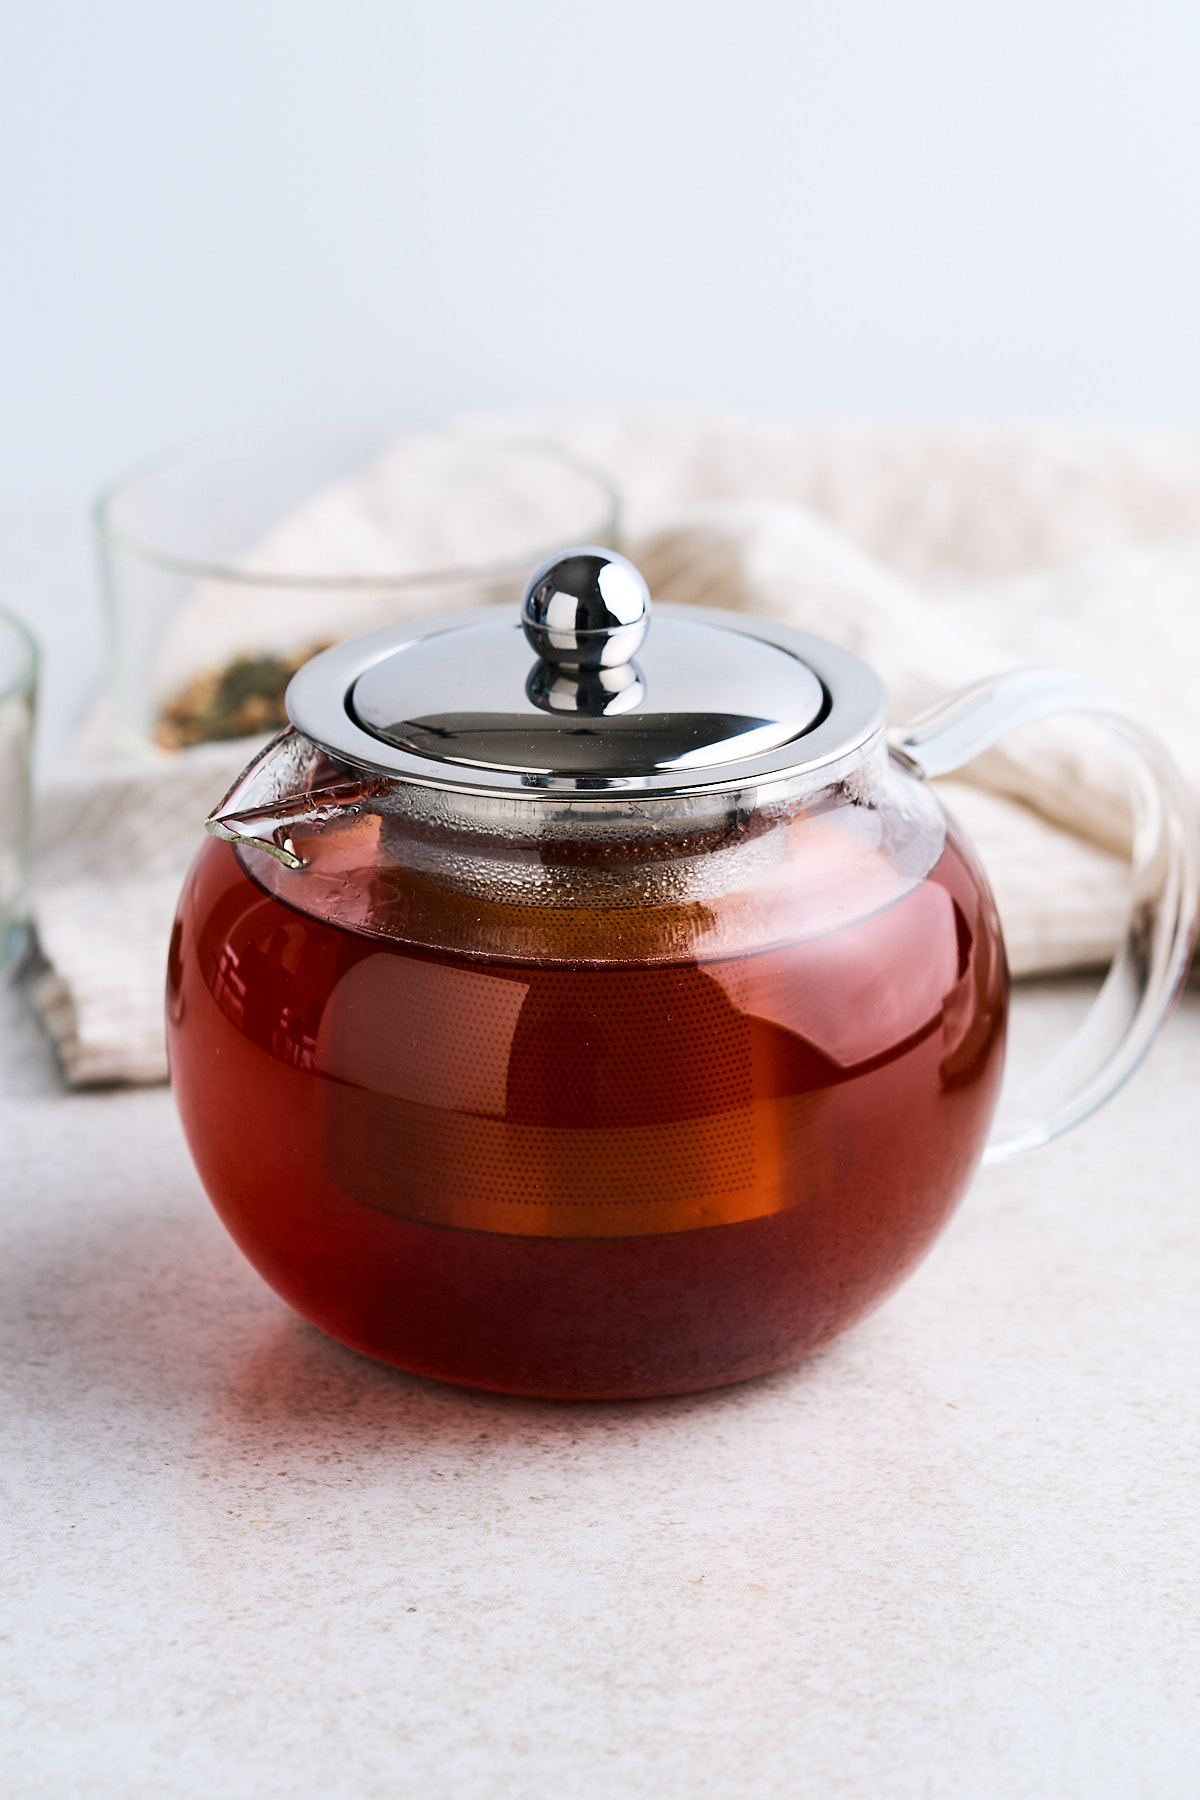 Black tea in a glass tea pot.